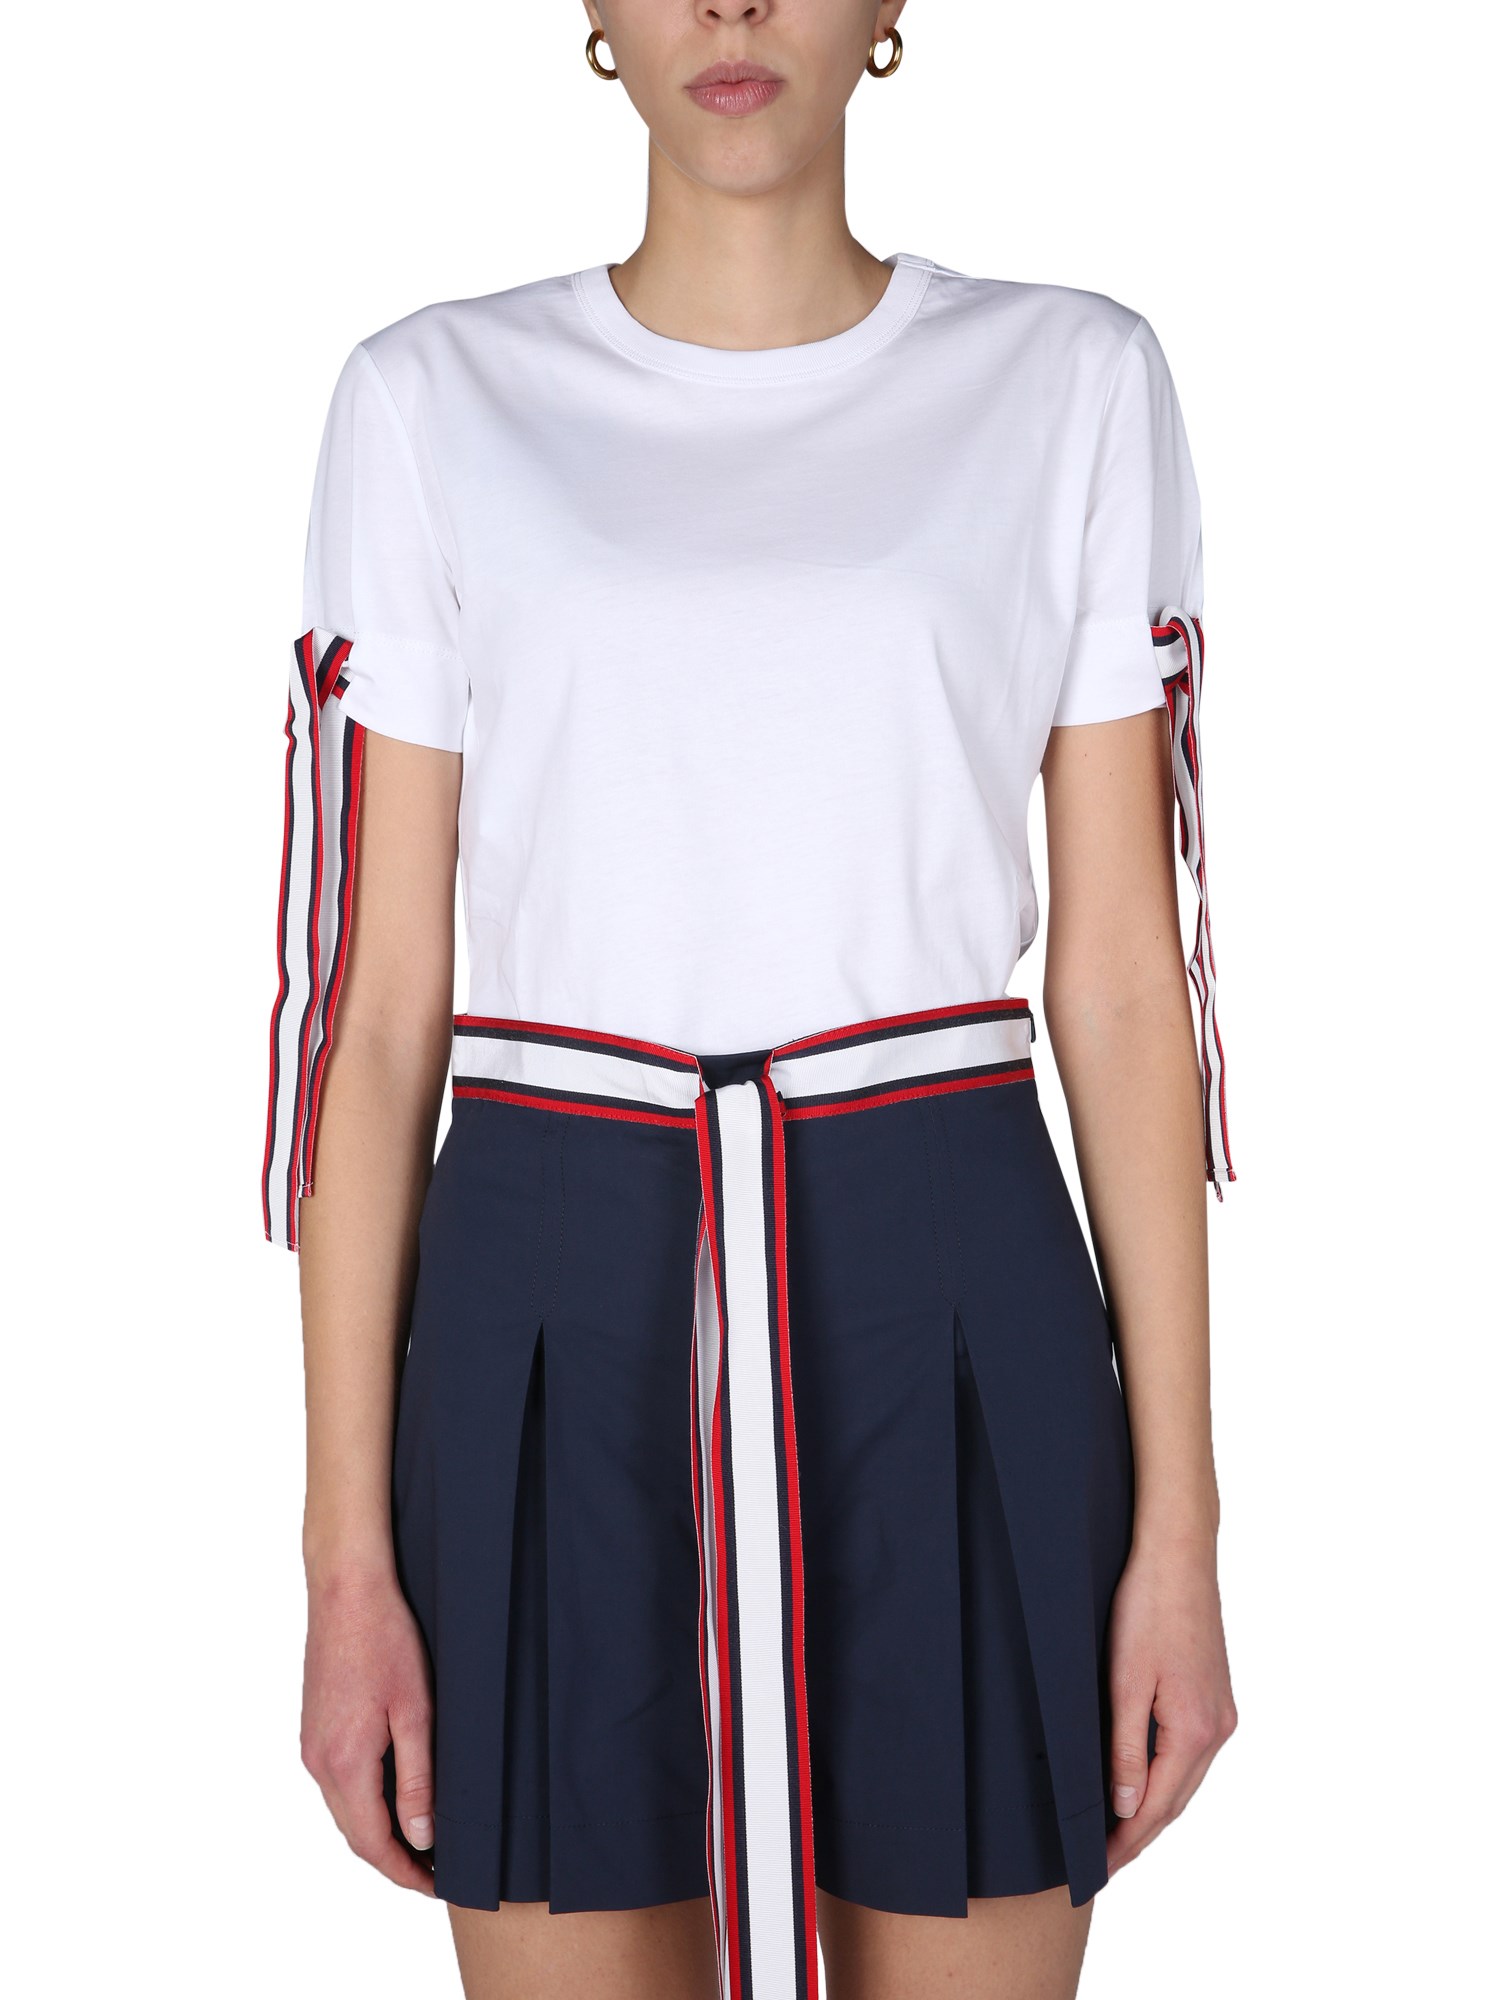 boutique moschino "sailor mood" t-shirt